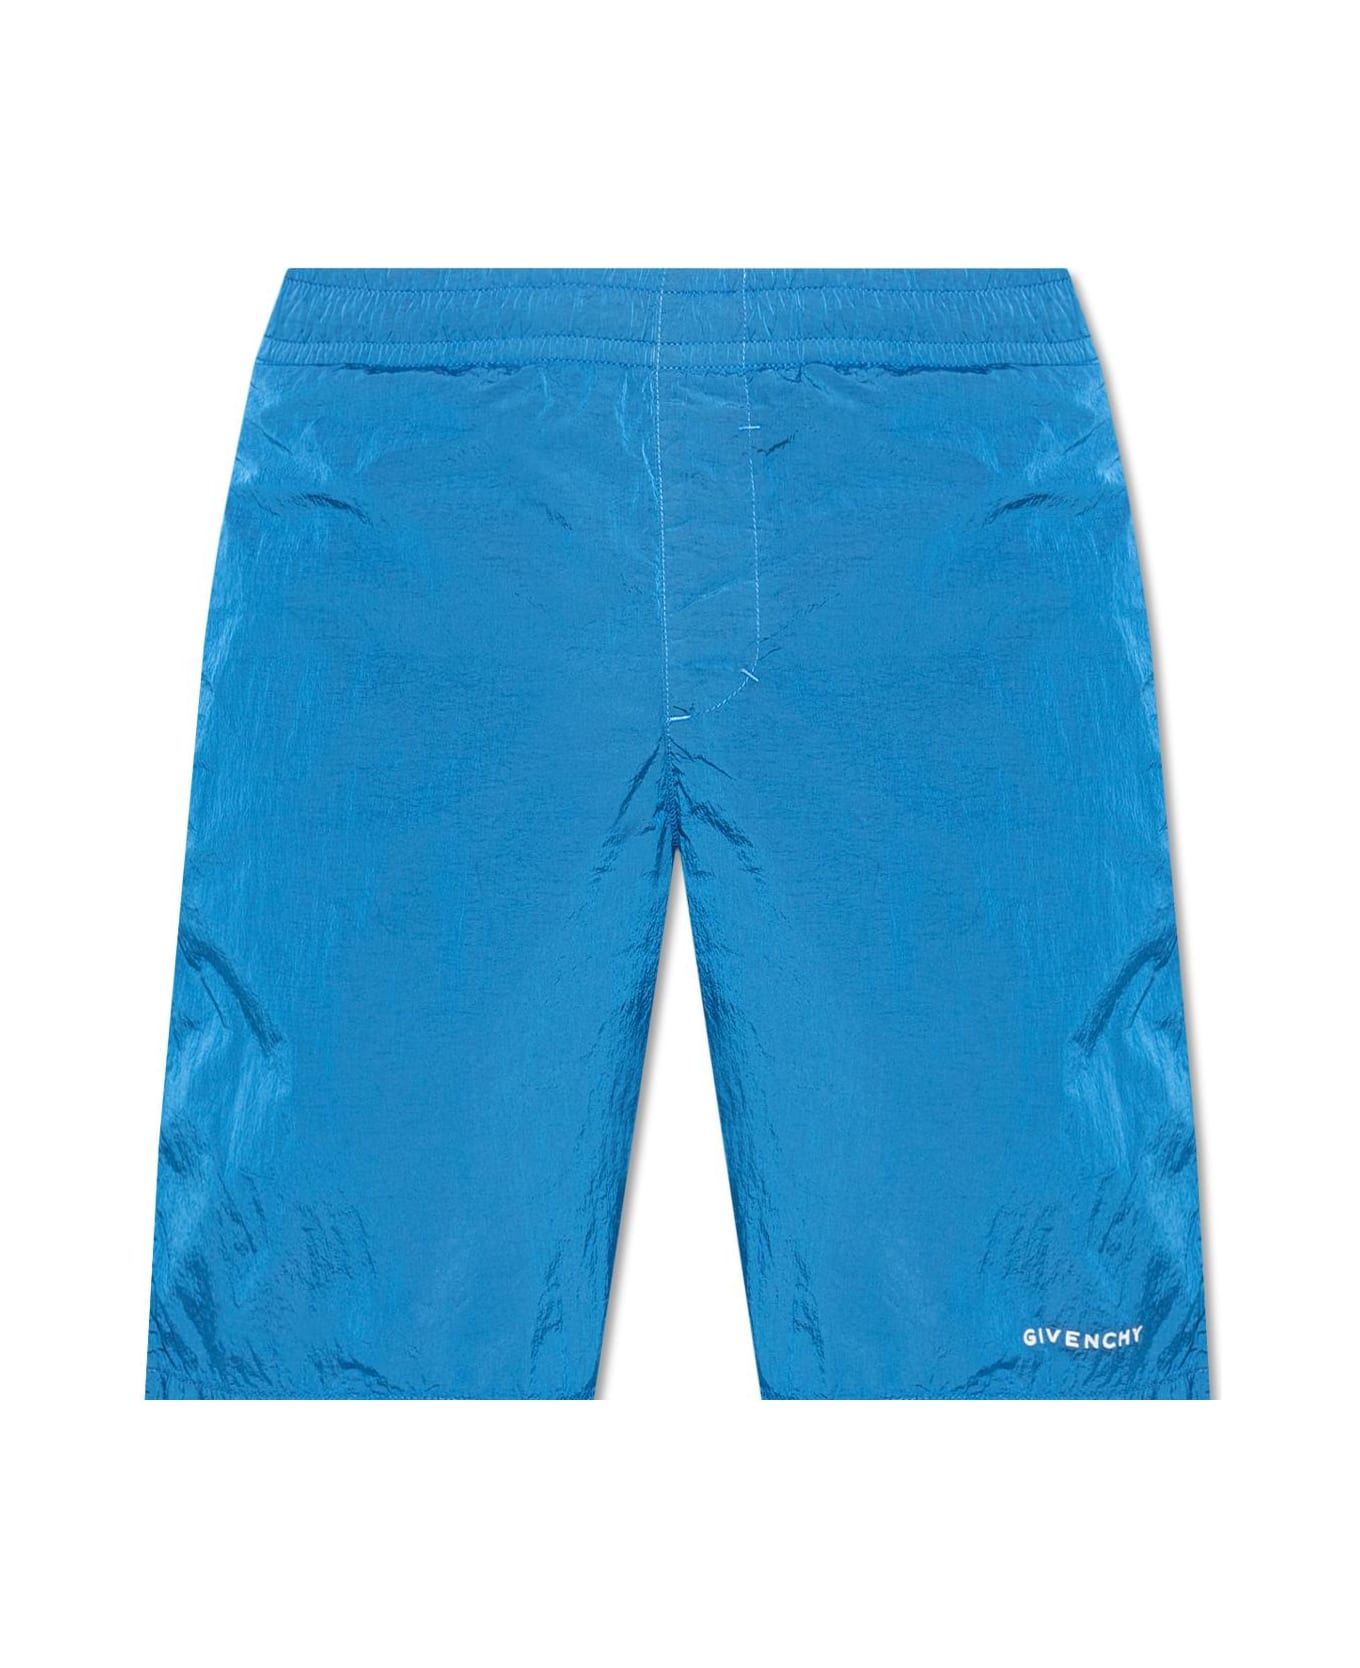 Givenchy Swim Shorts - Blu